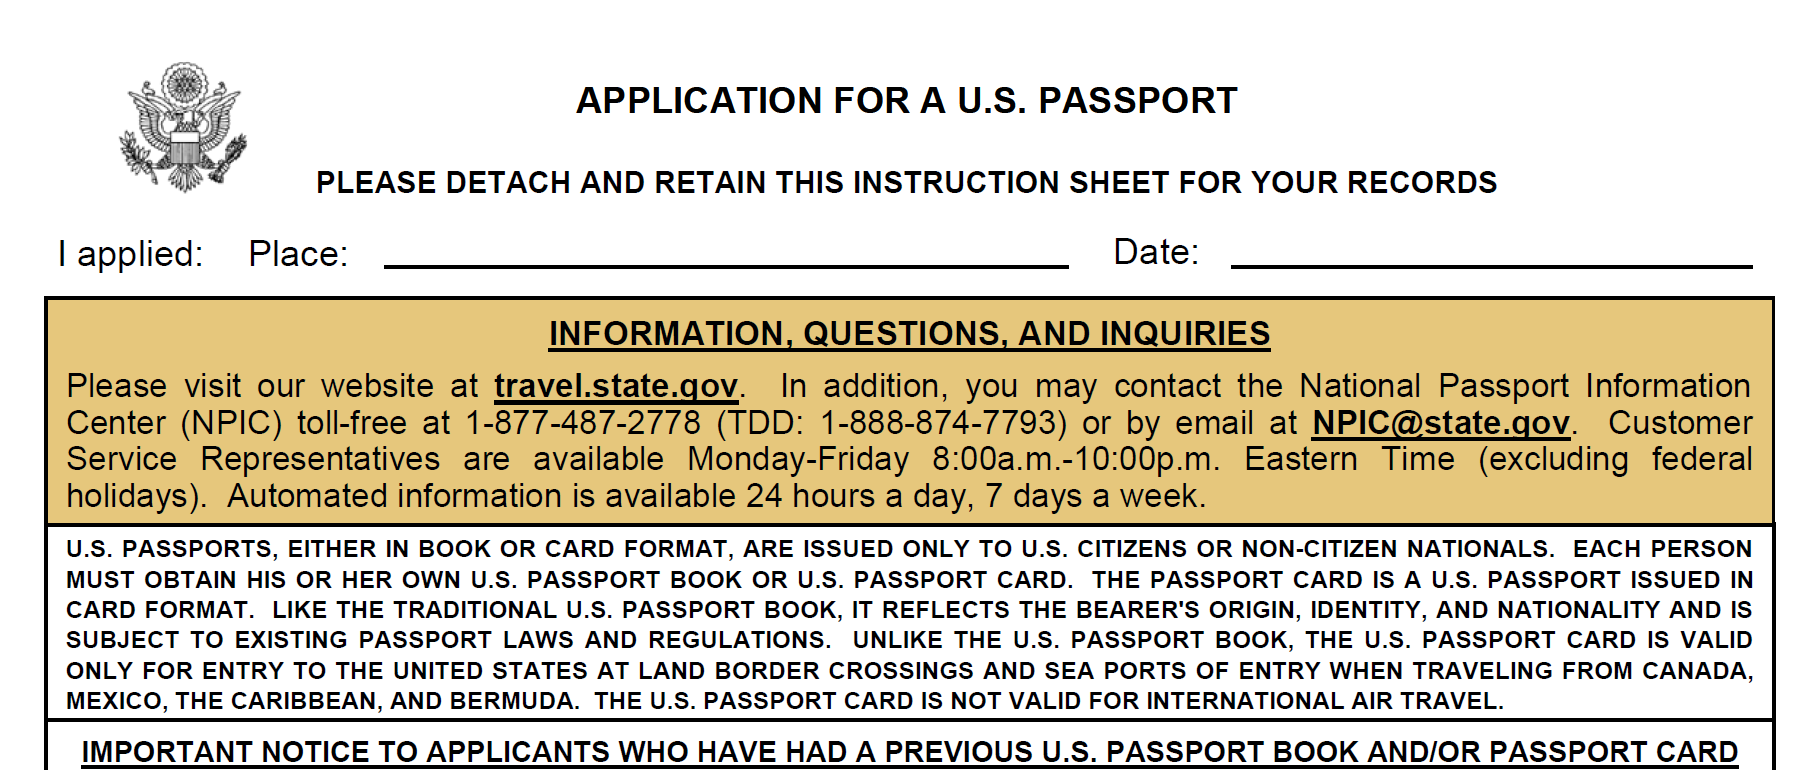 application for US passport p1